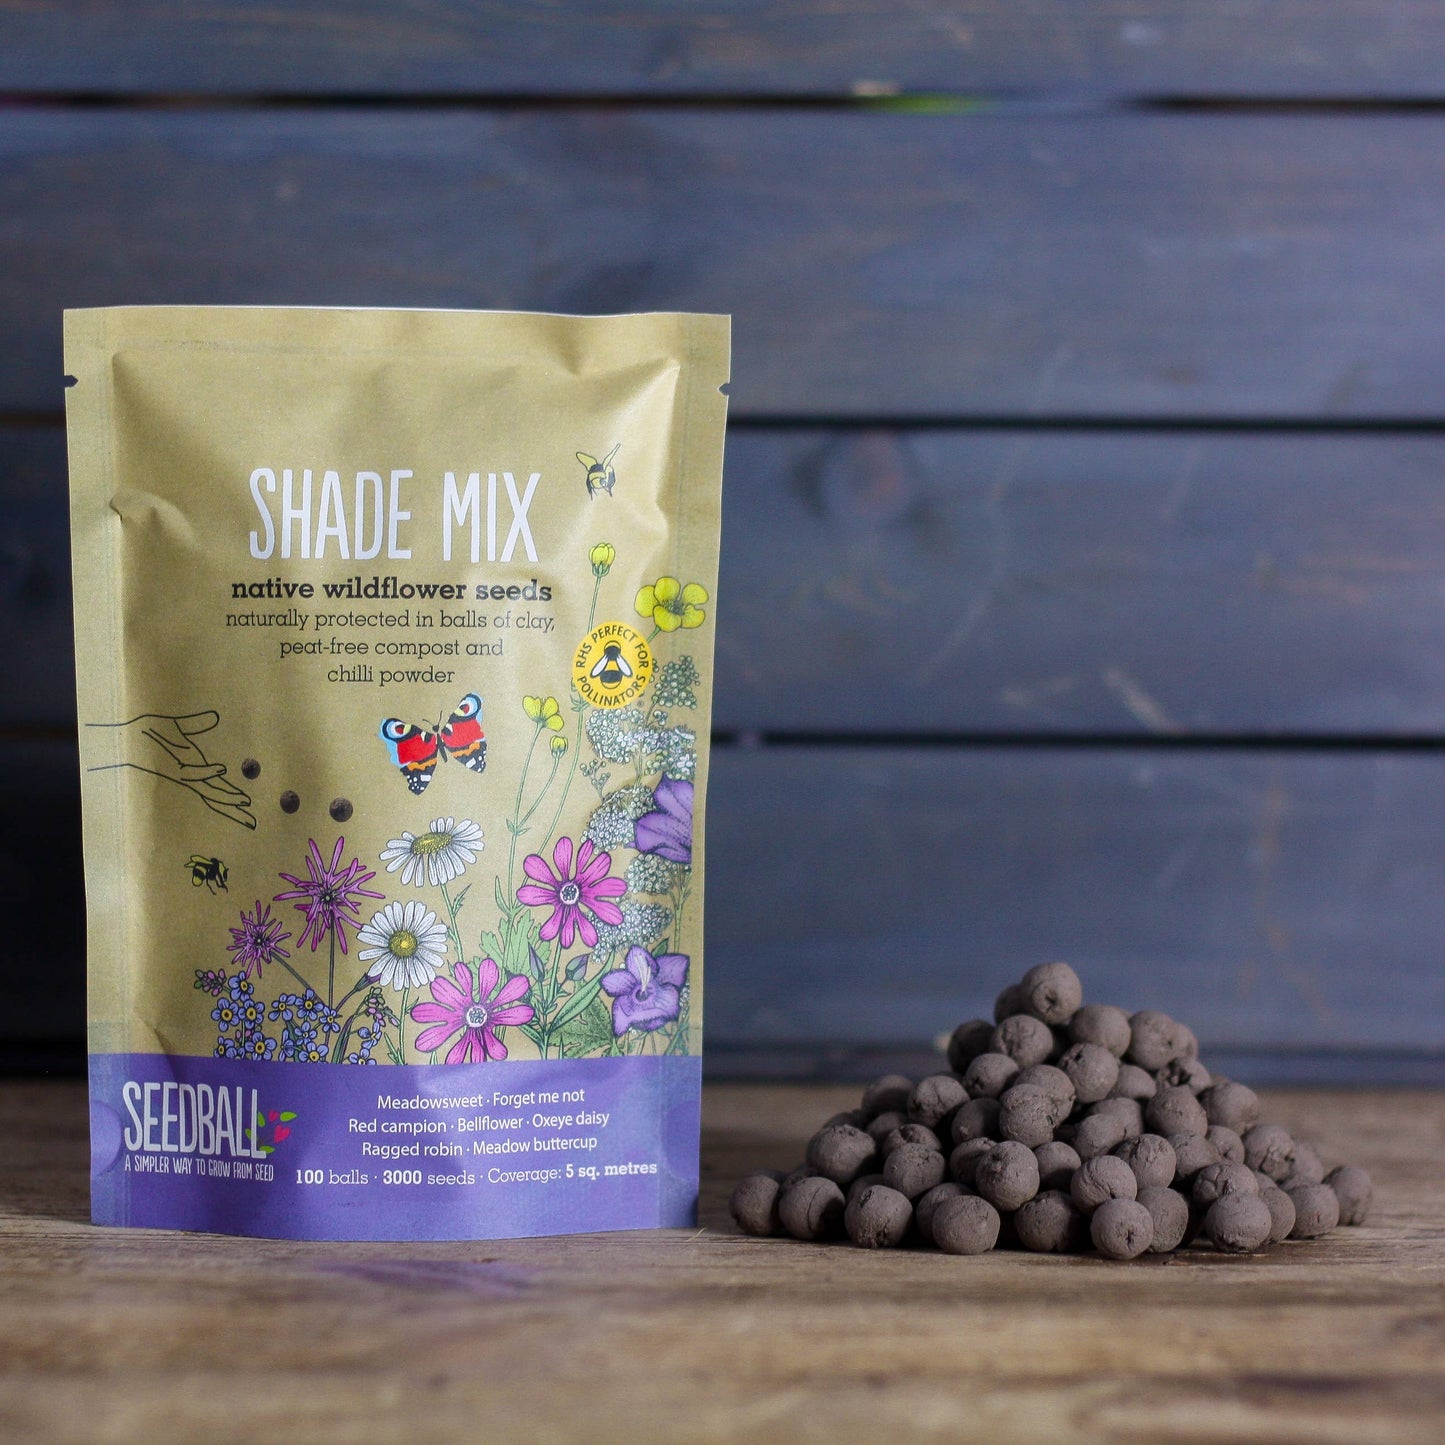 Seedball Wildflower Grab Bags - Shade Mix